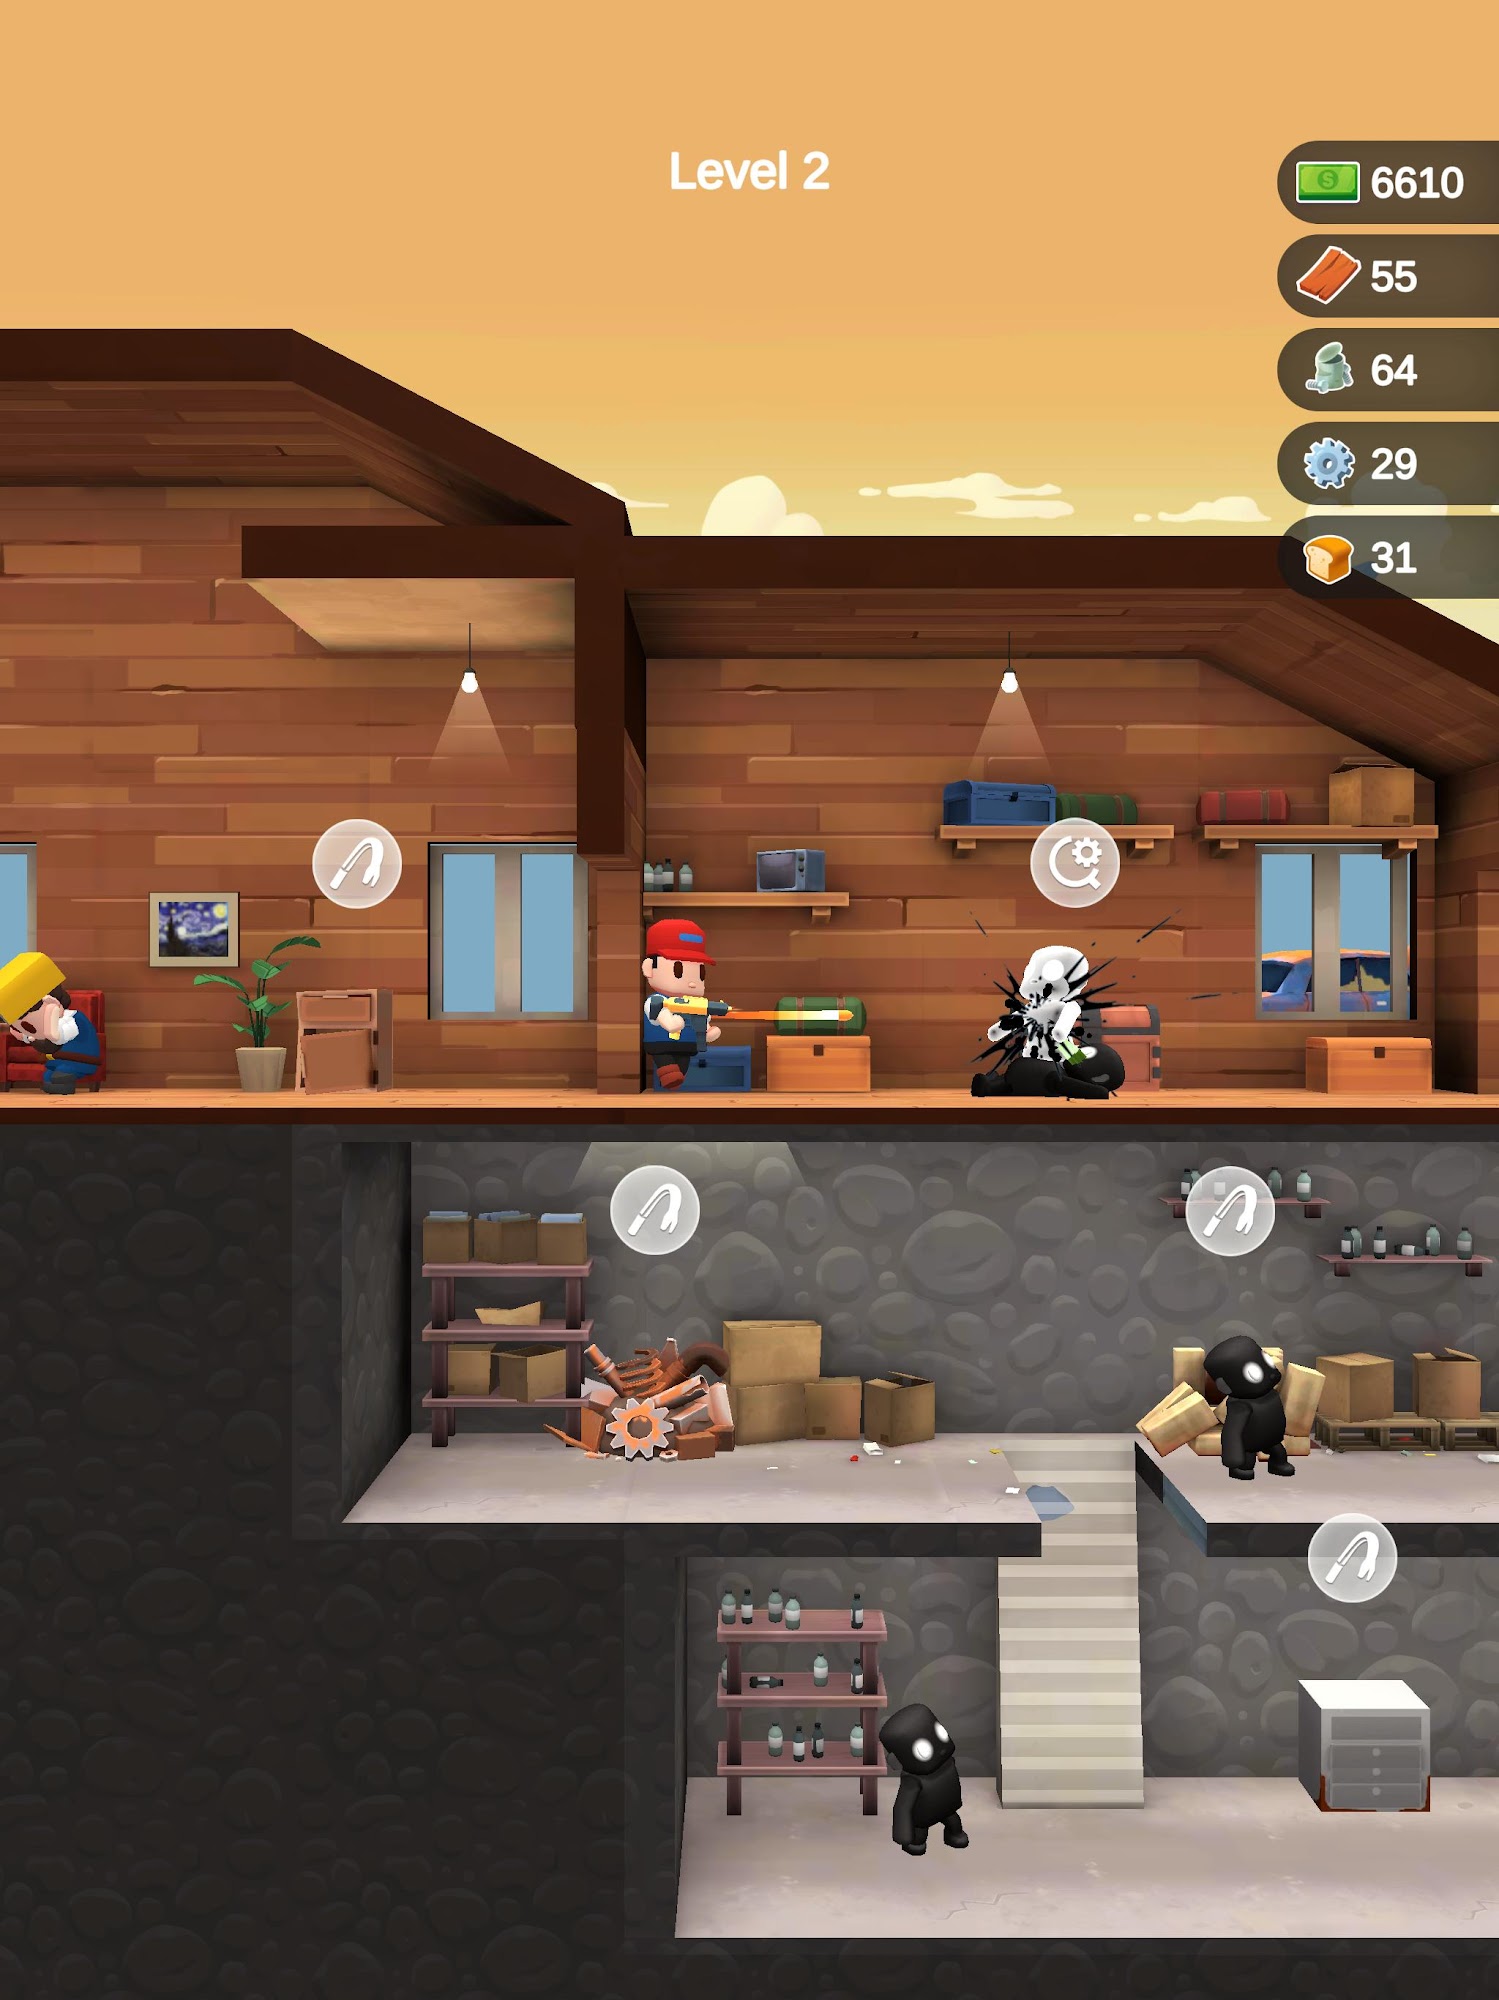 Station Zero - Android game screenshots.